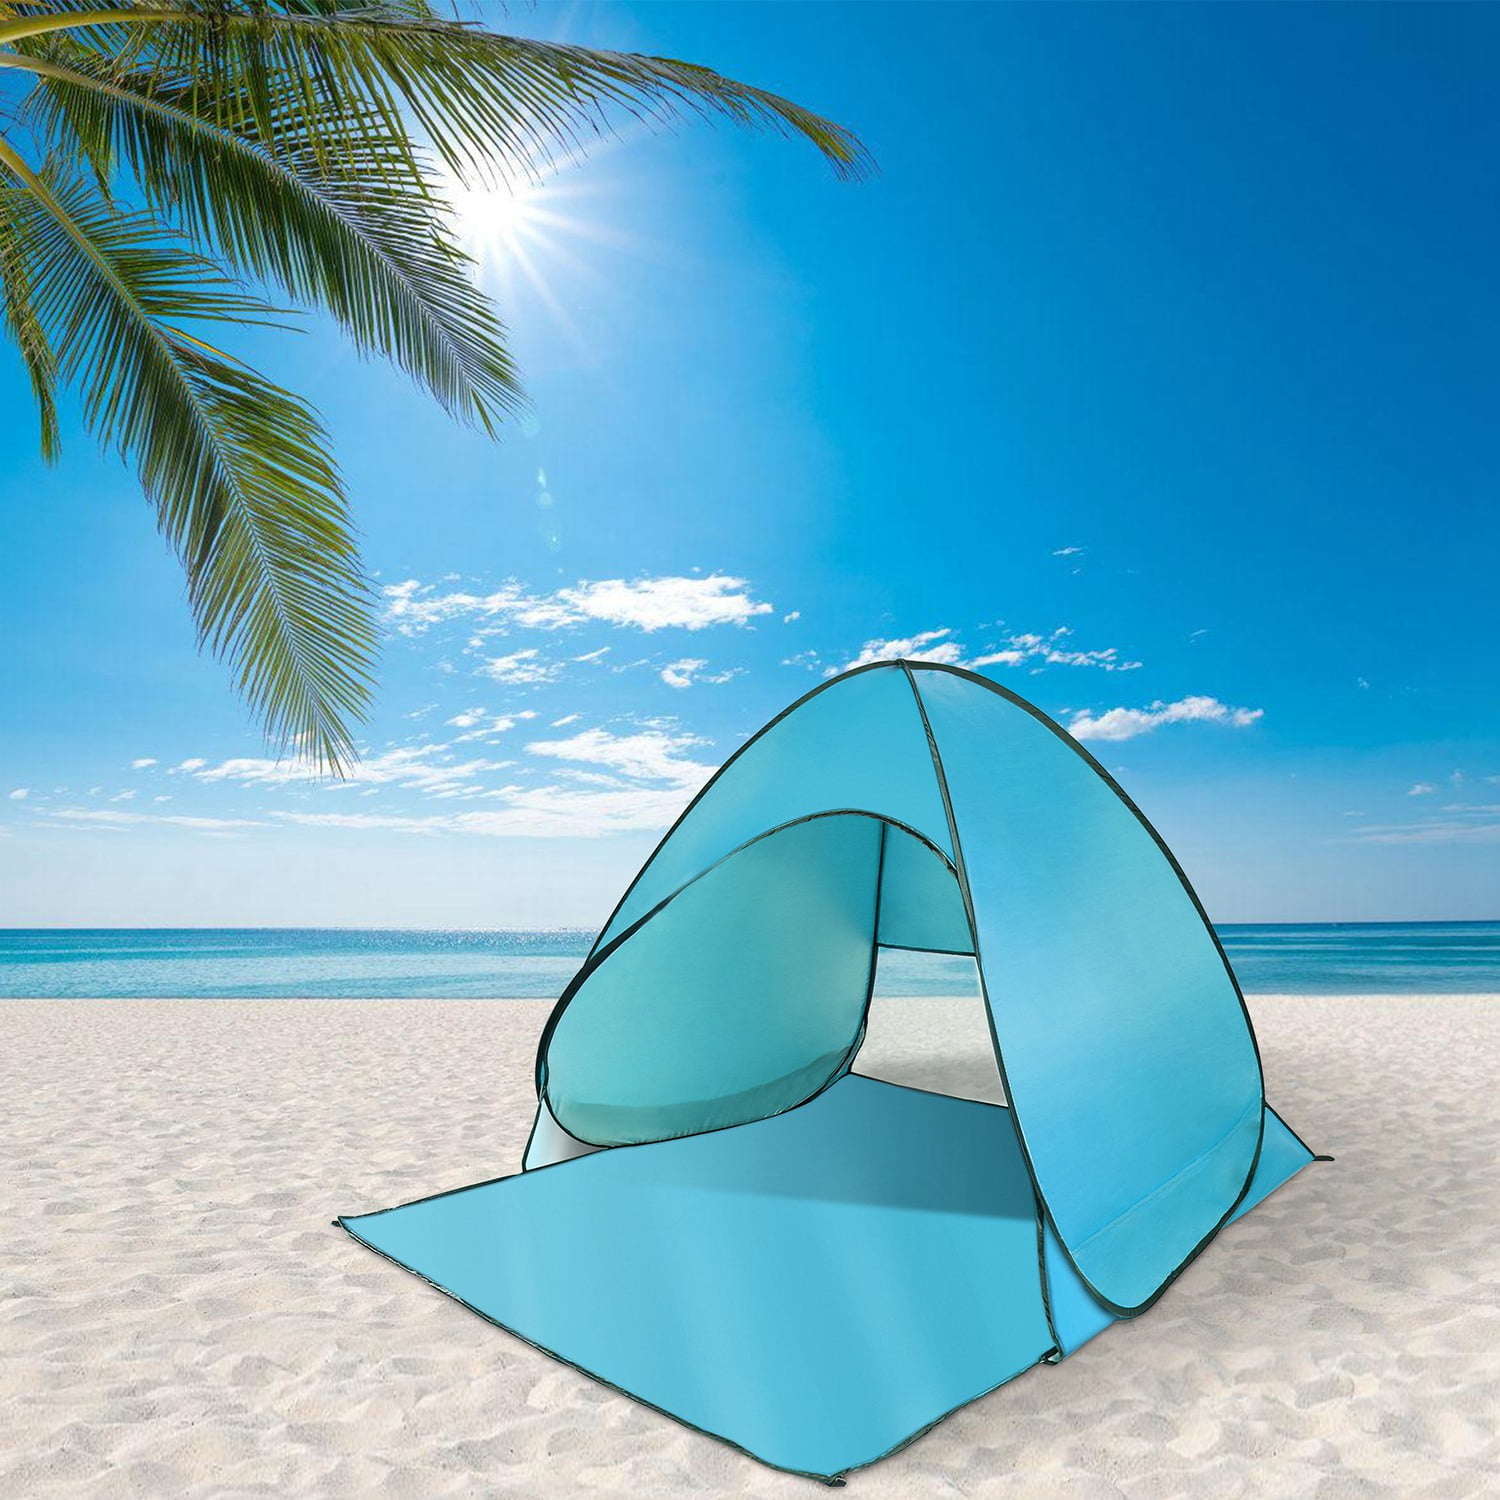 Plak opnieuw voorkomen Lima Beach Tent, iMountek Anti-UV Pop up Sun Shelter Tents Automatic Sun  Umbrella Outdoor Tent with Carry Bag, Fit 1-3 Persons for Beach, Camping,  Hiking, Blue - Walmart.com